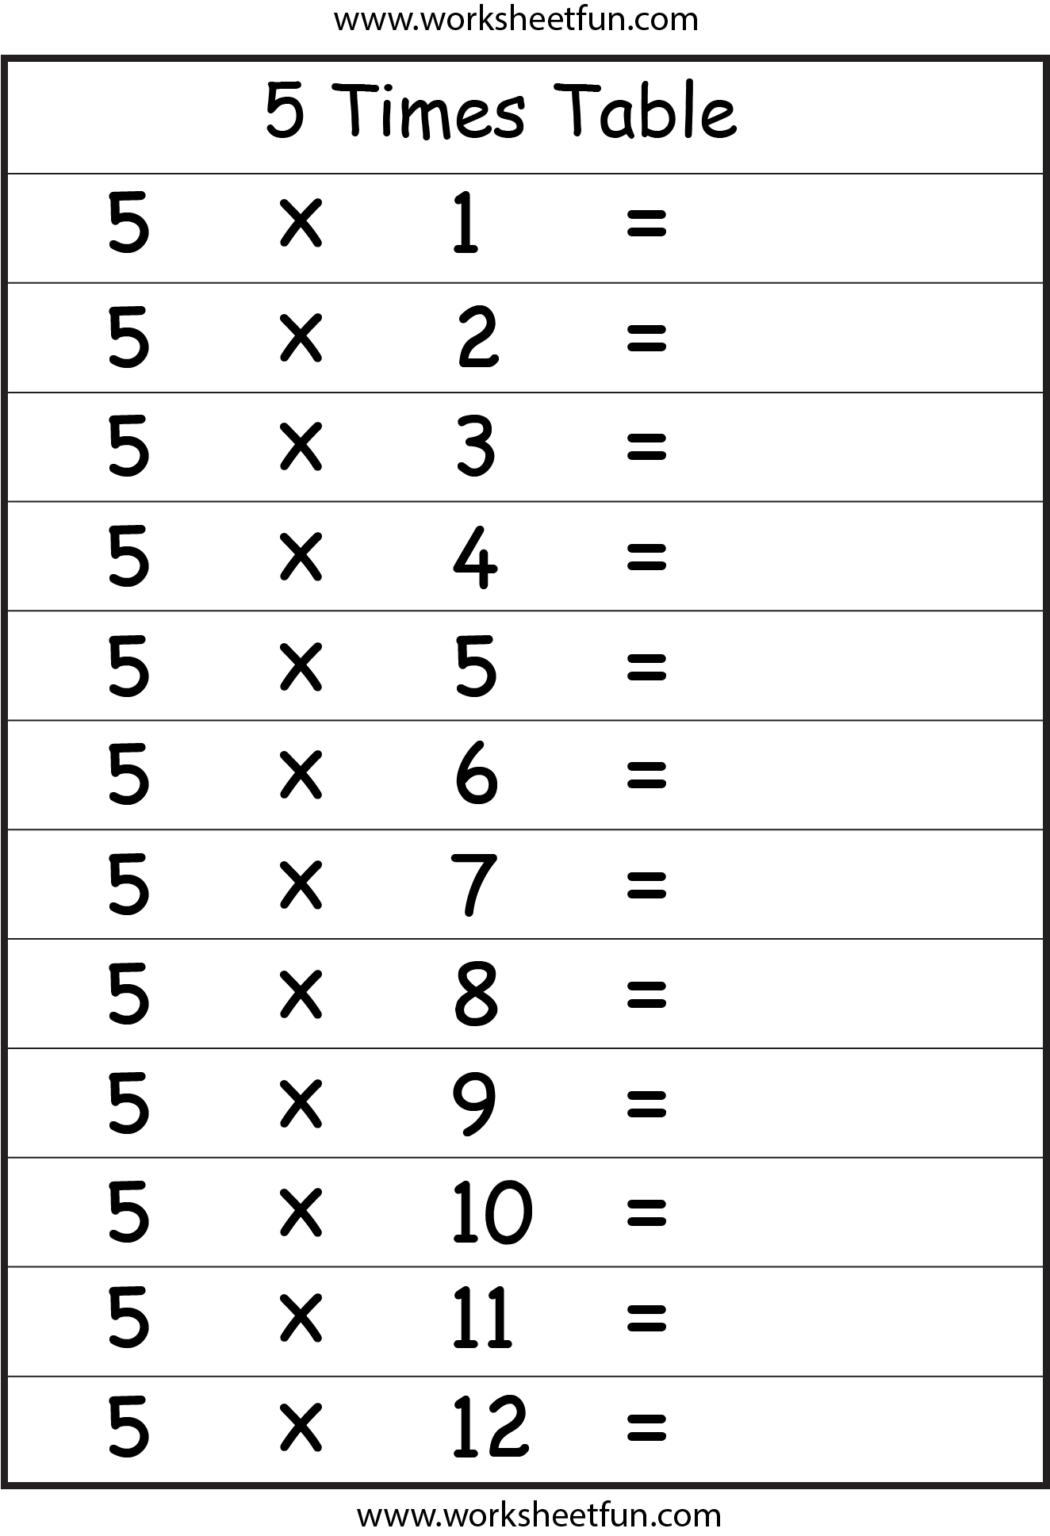 multiplication-times-tables-worksheets-2-3-4-5-6-7-8-printablemultiplication